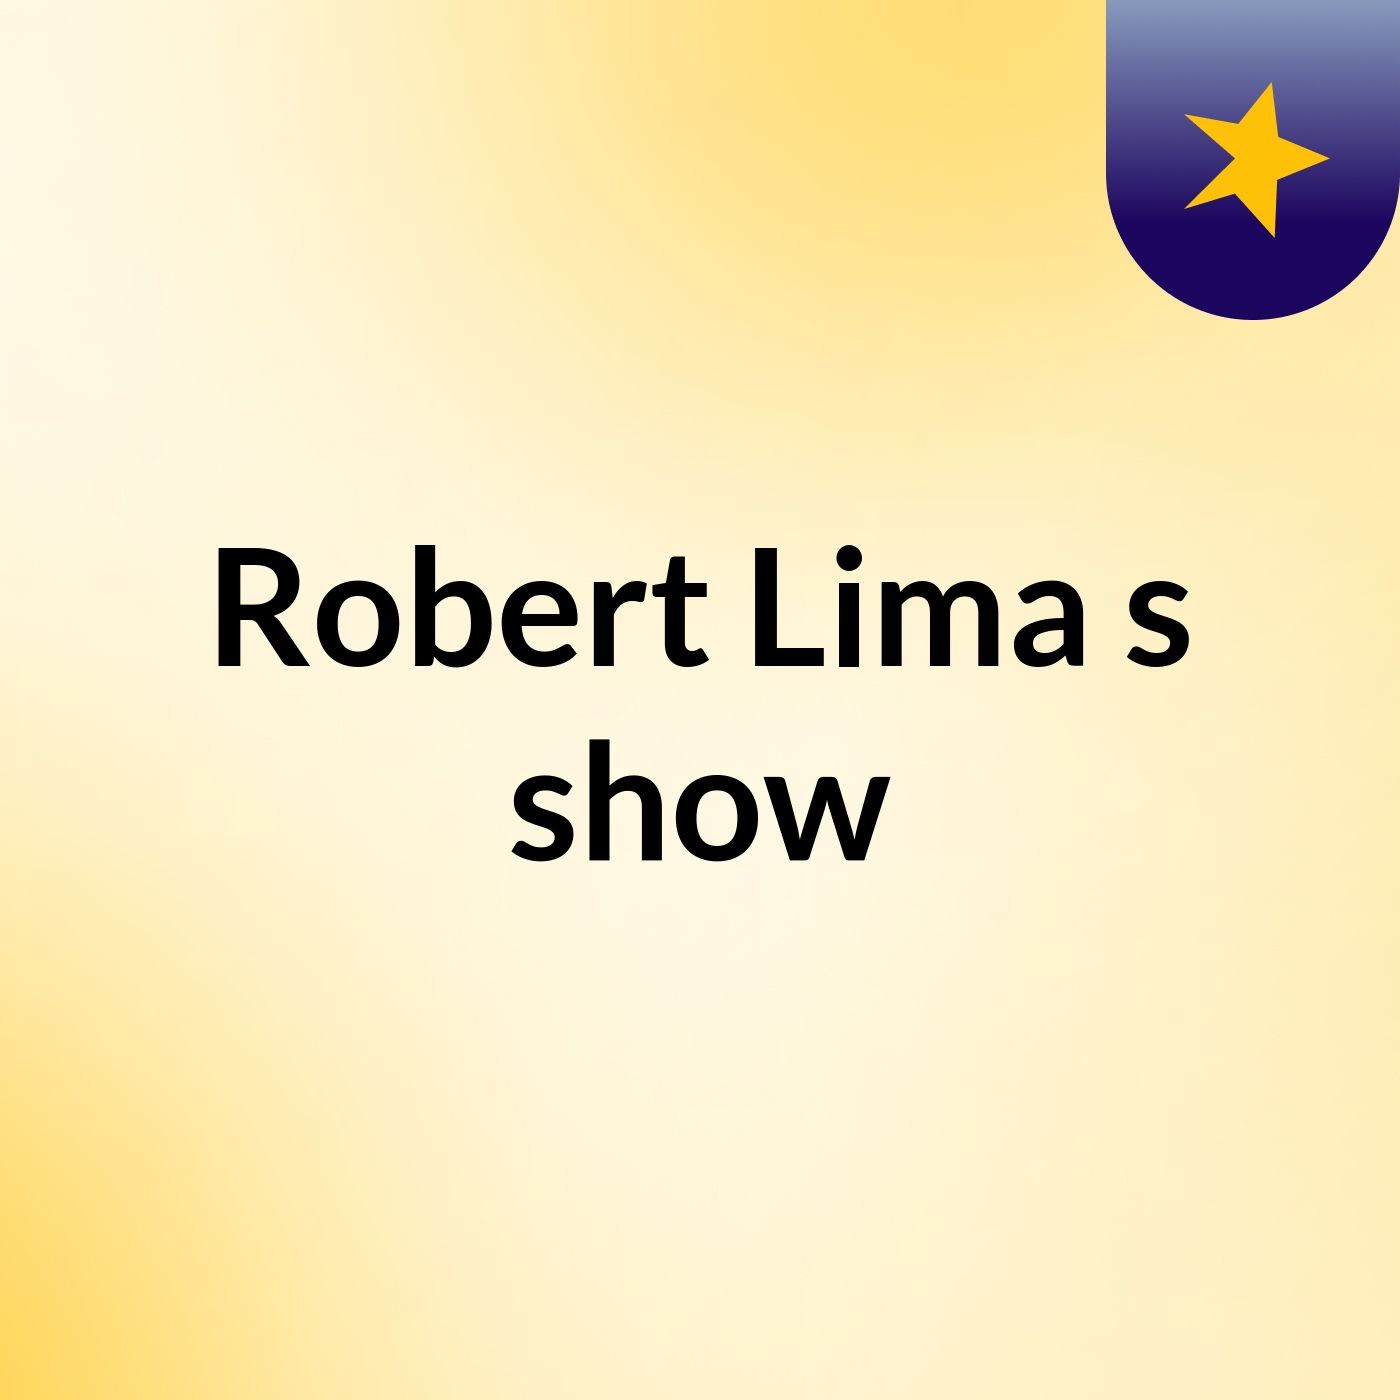 Robert Lima's show